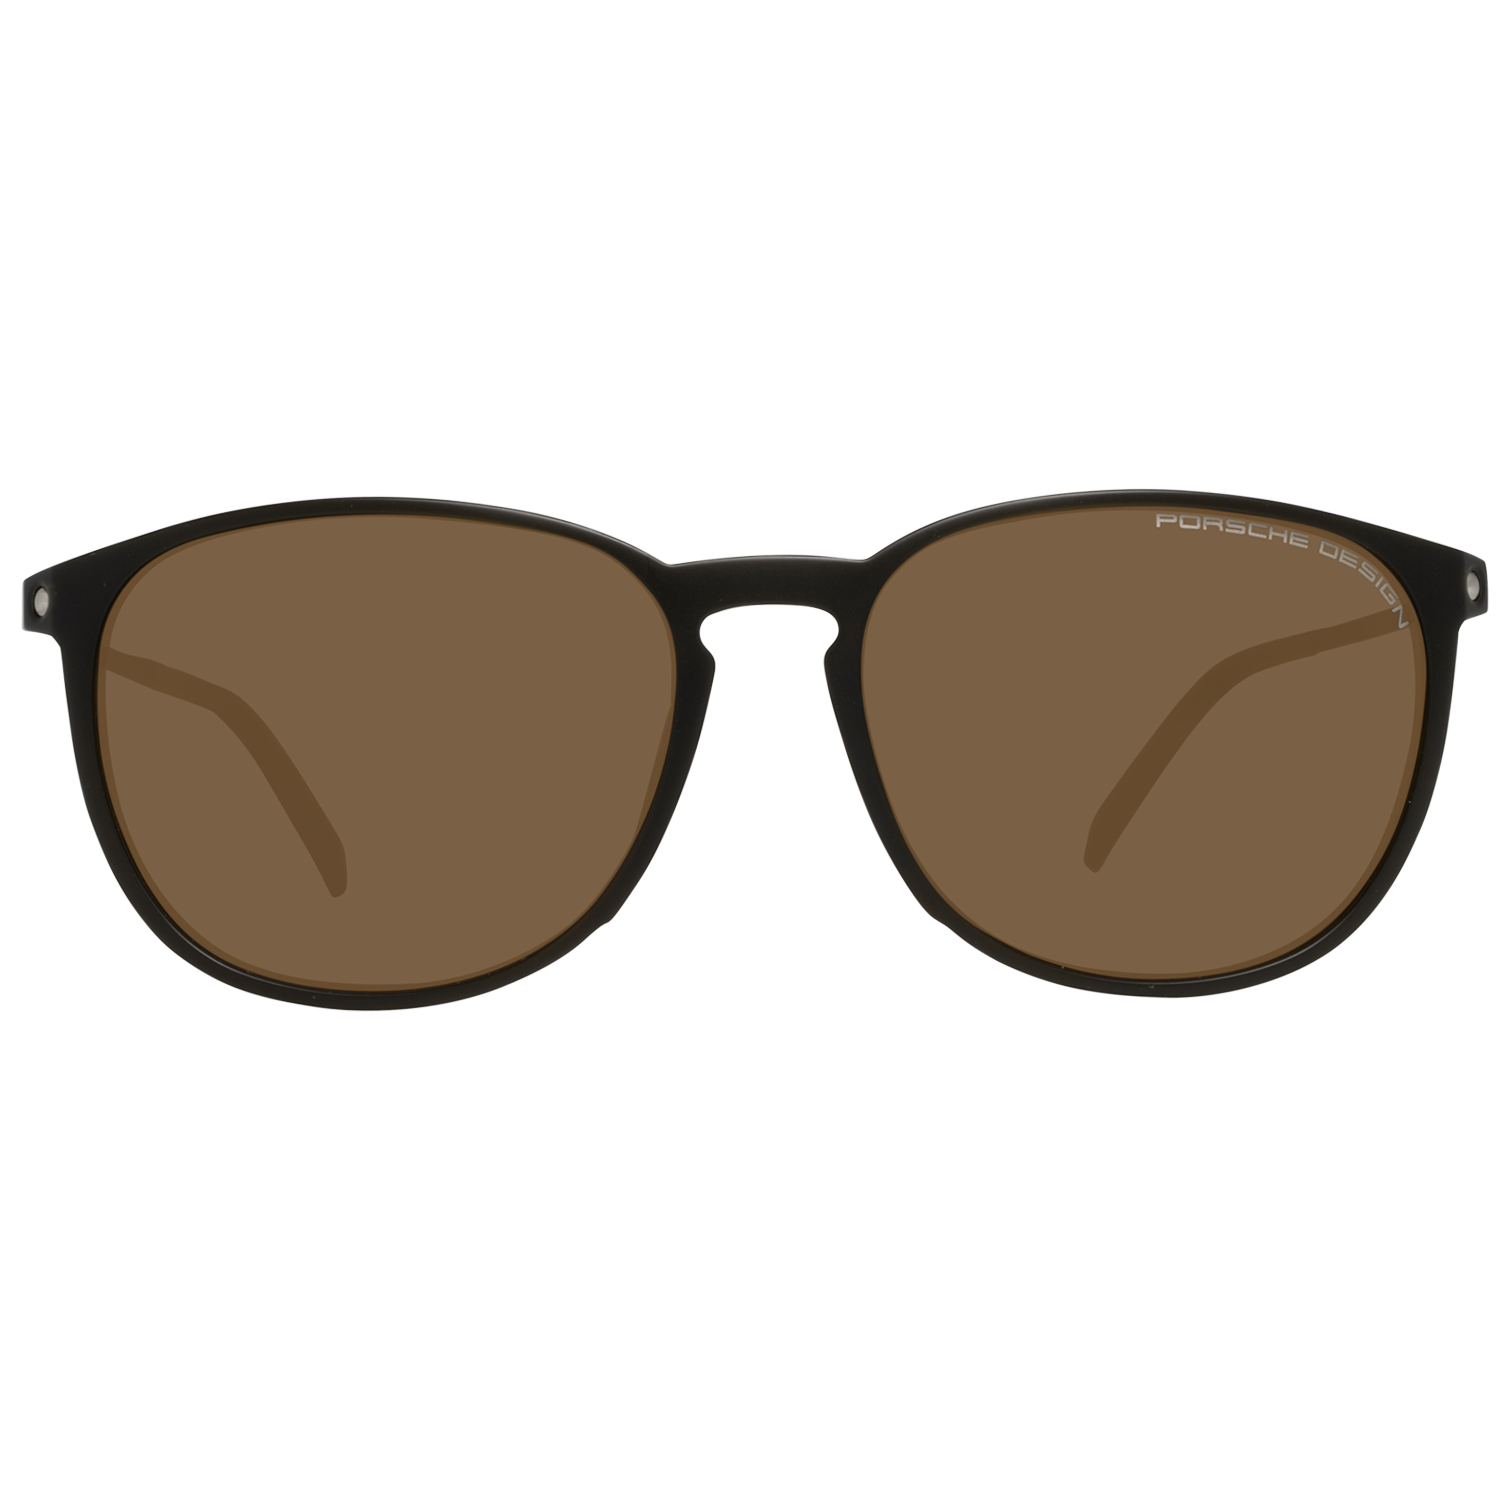 Porsche Design Sunglasses Porsche Design Sunglasses P8683 C 57 Titanium Eyeglasses Eyewear UK USA Australia 